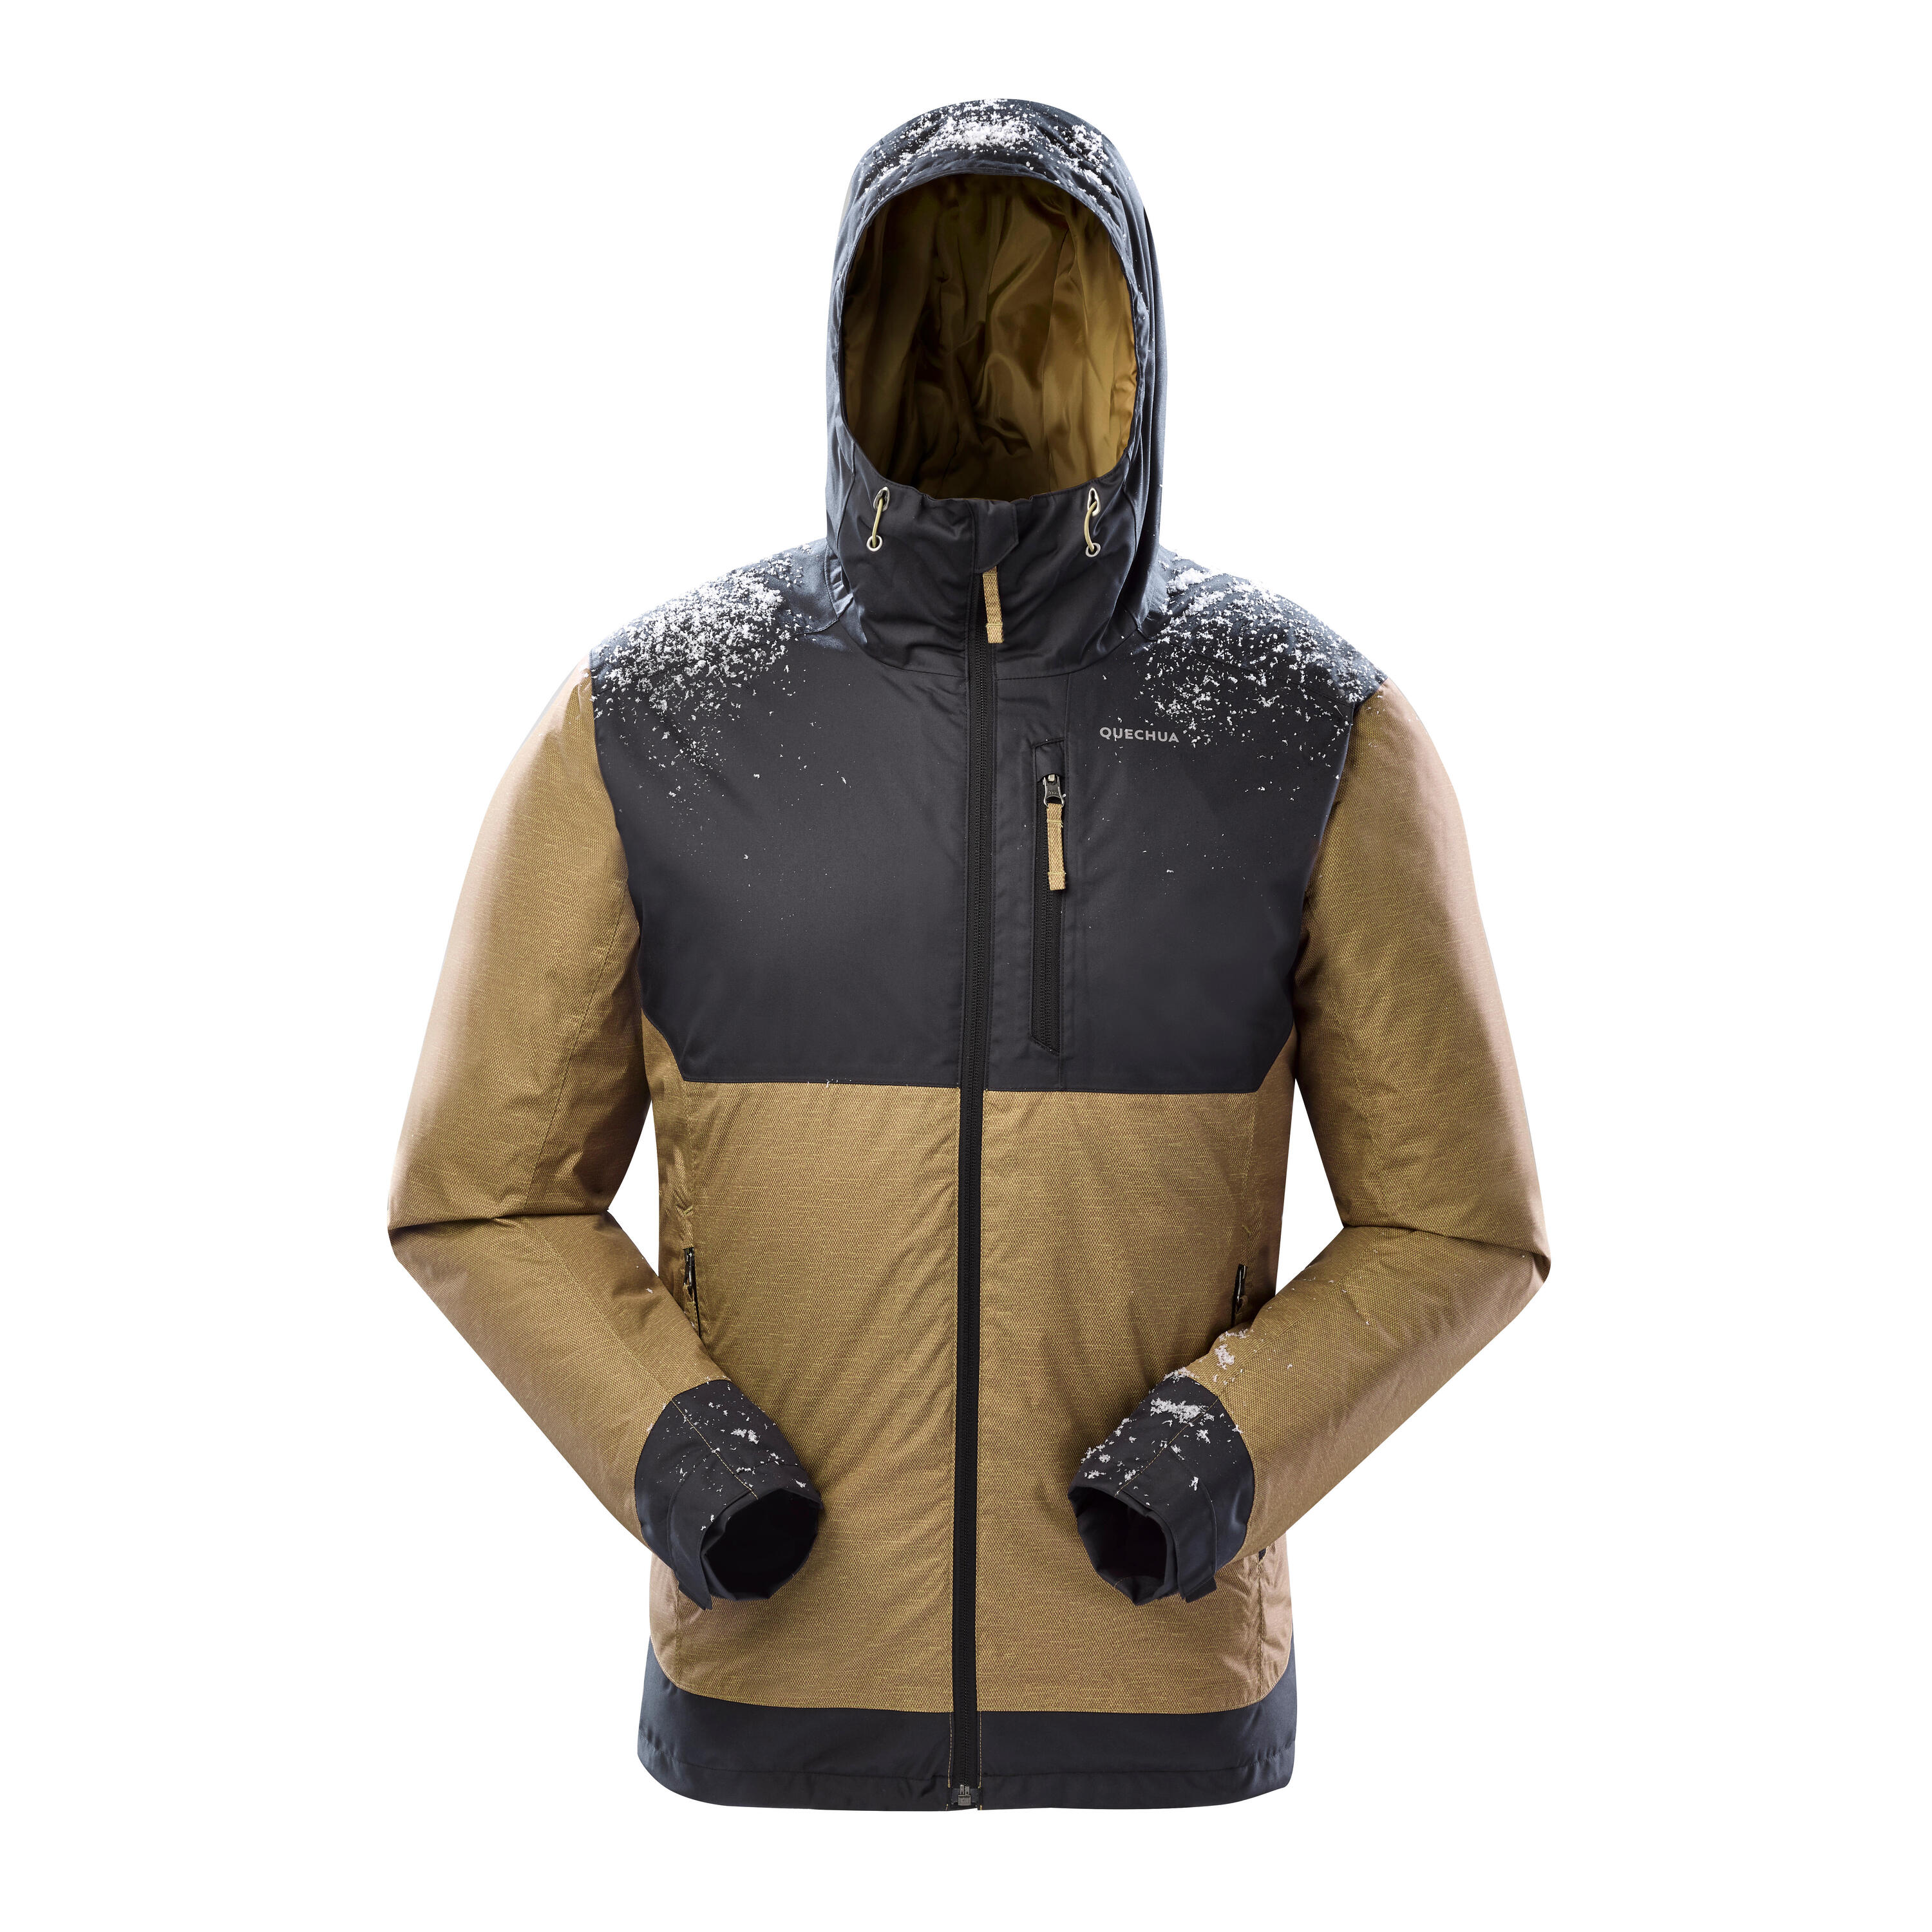 Men’s hiking waterproof winter jacket - SH500 -10°C 20/20